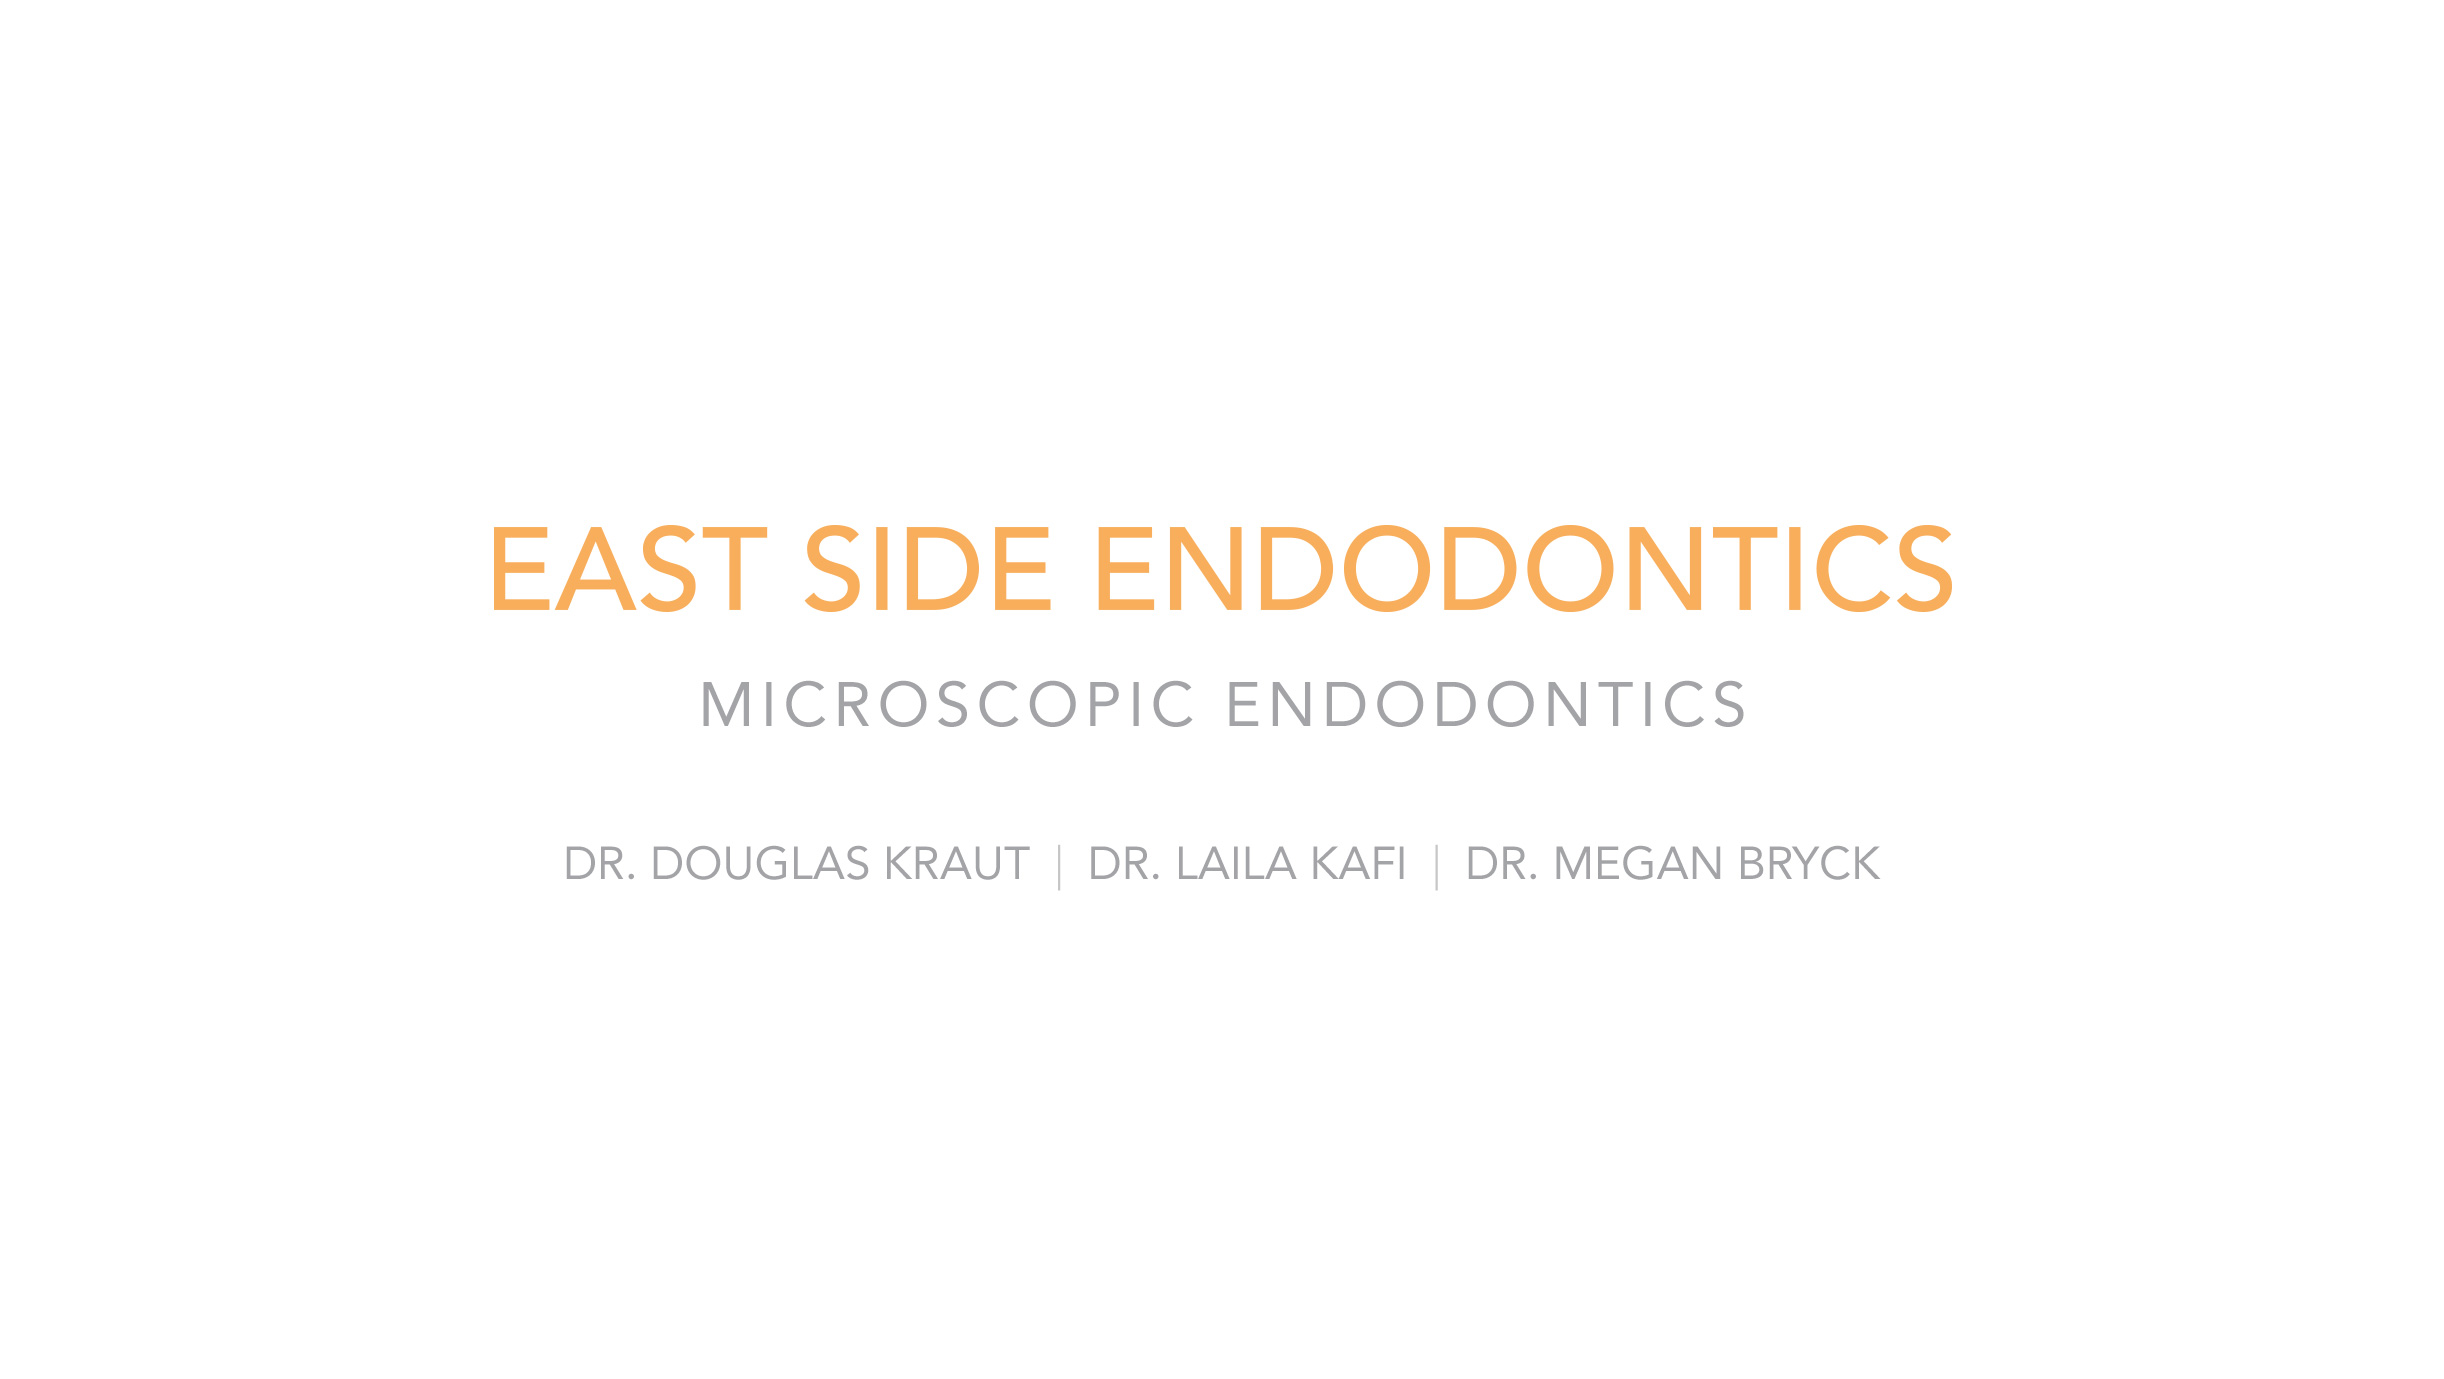  East Side Endodontics, Microscopic Endodontics - Dr. Douglas Kraut, Dr. Laila Kafi, Dr. Tanjit Taggar and Dr. Megan Bryck